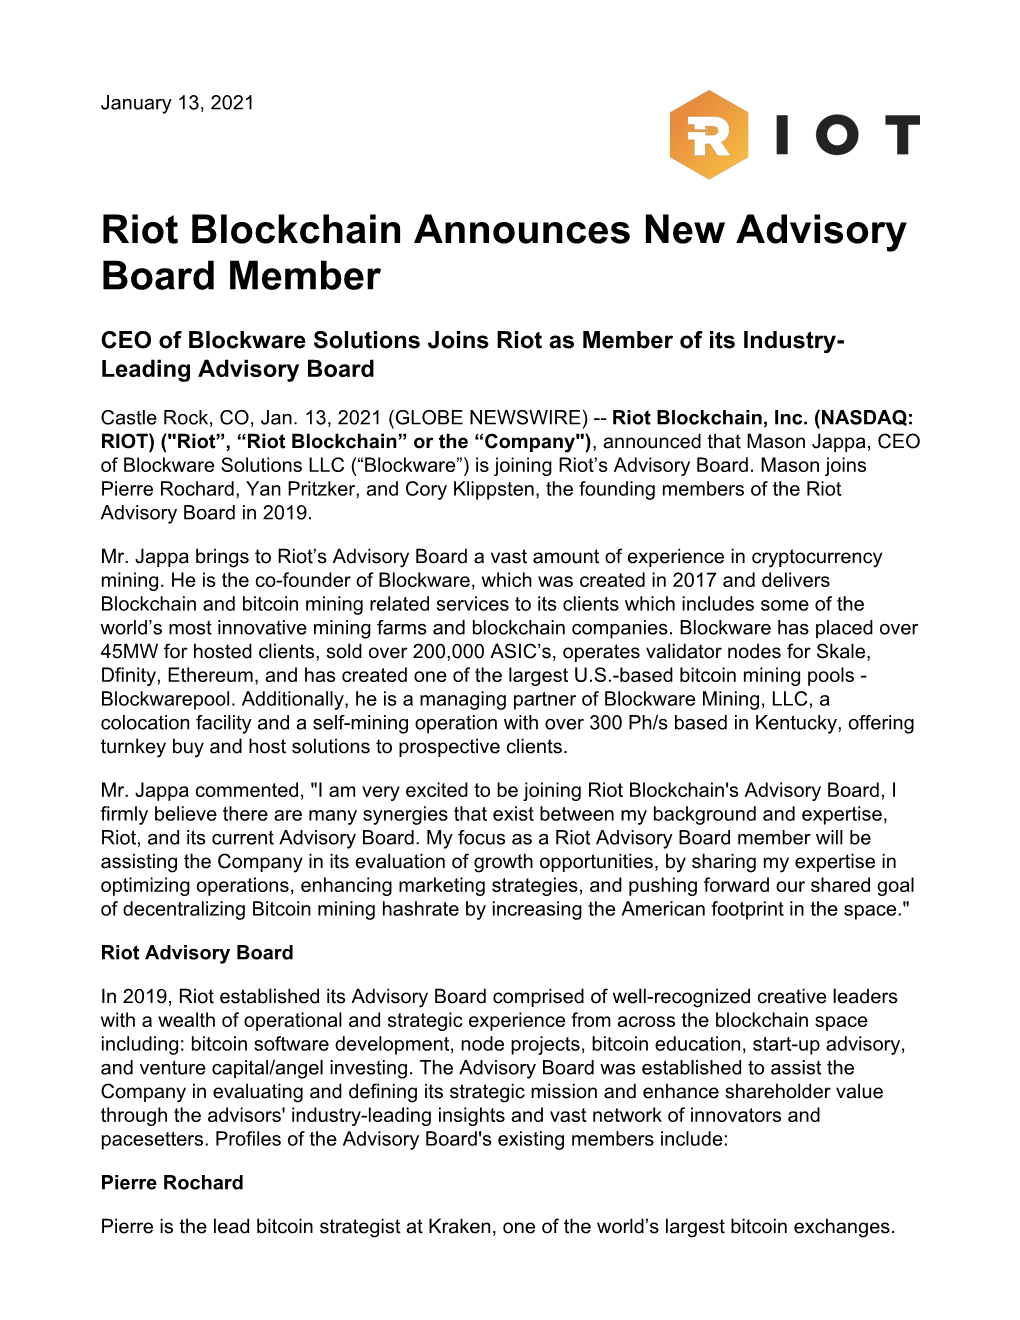 Riot Blockchain Announces New Advisory Board Member